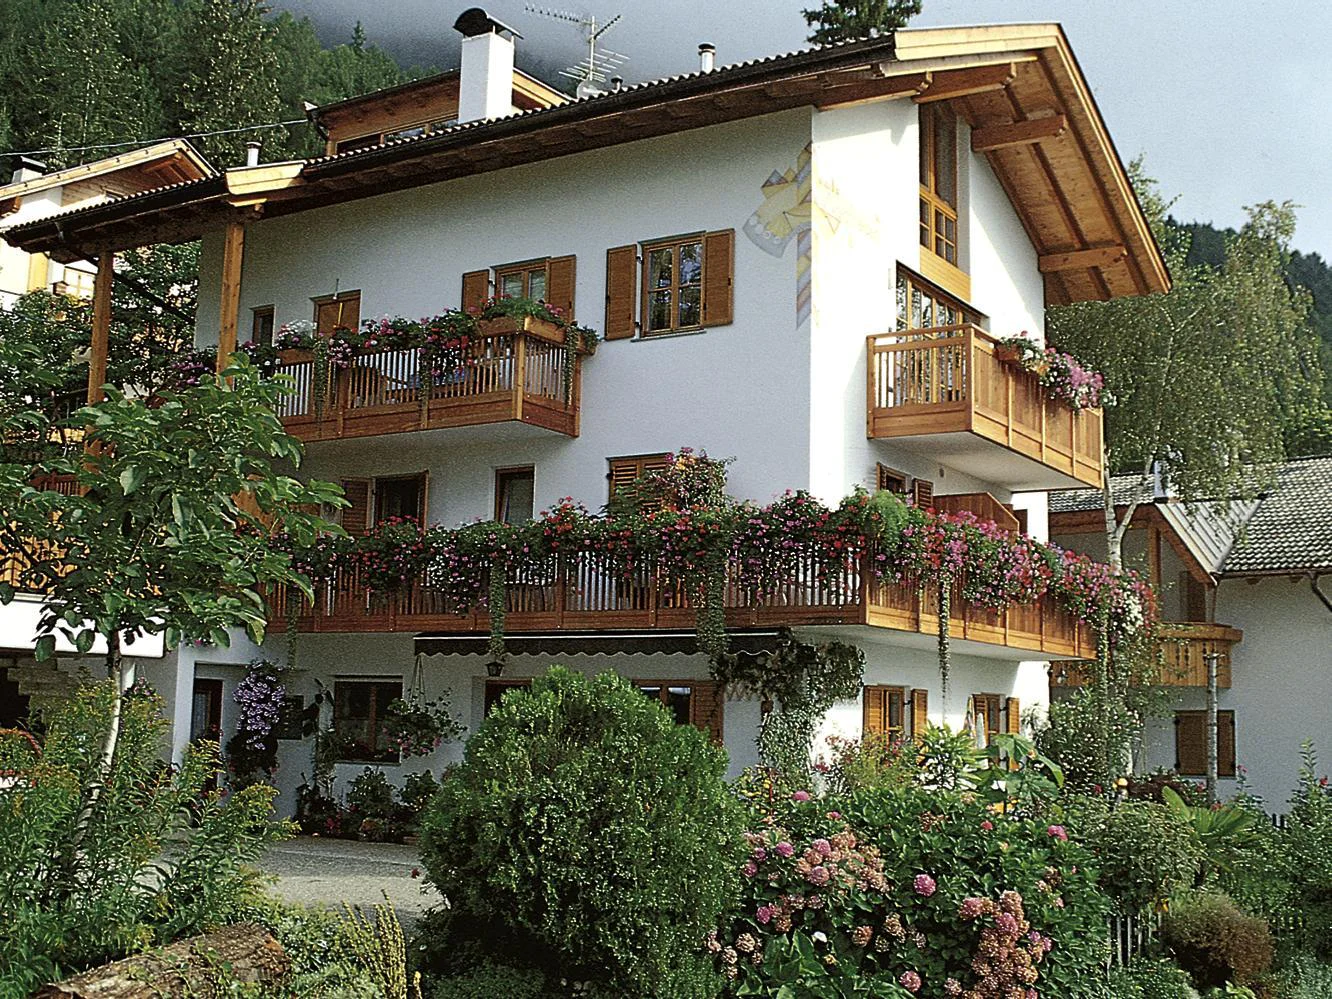 Haus Waldfrieden Tirol/Tirolo 1 suedtirol.info